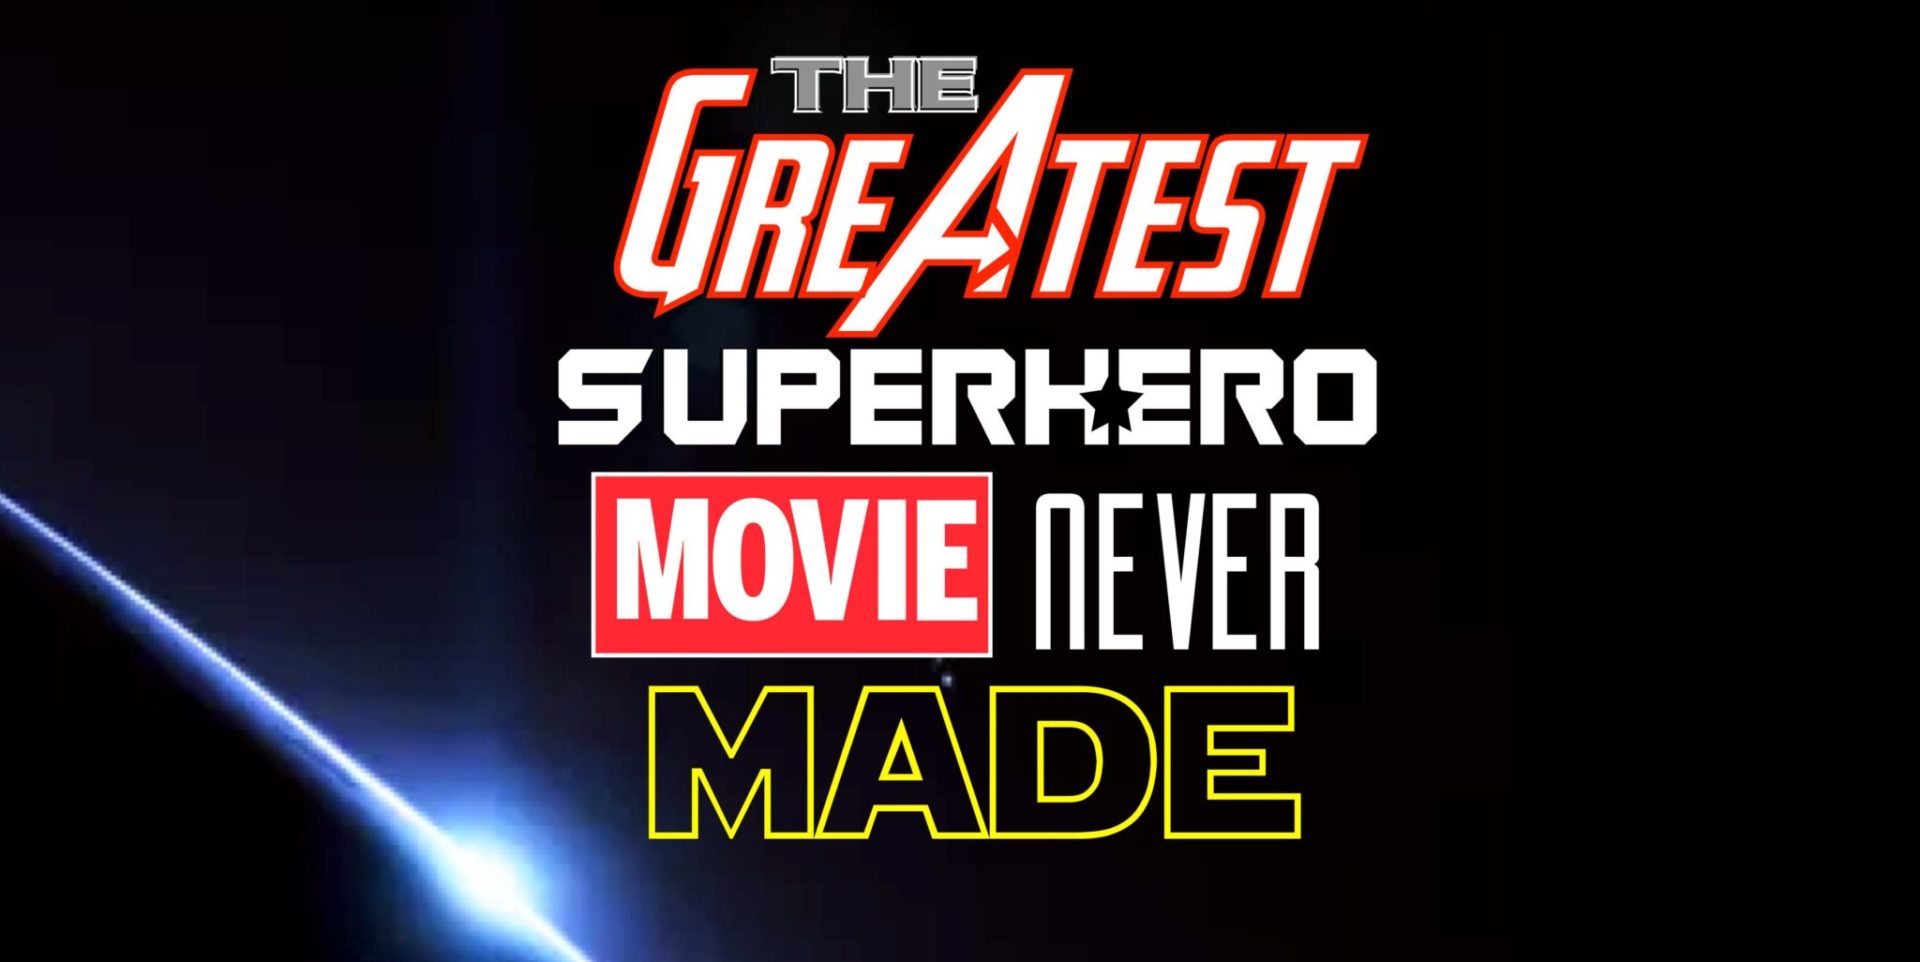 Gary Tro 'The Greatest Super Hero Movie Never Made' Brighton Fringe Festival 2019